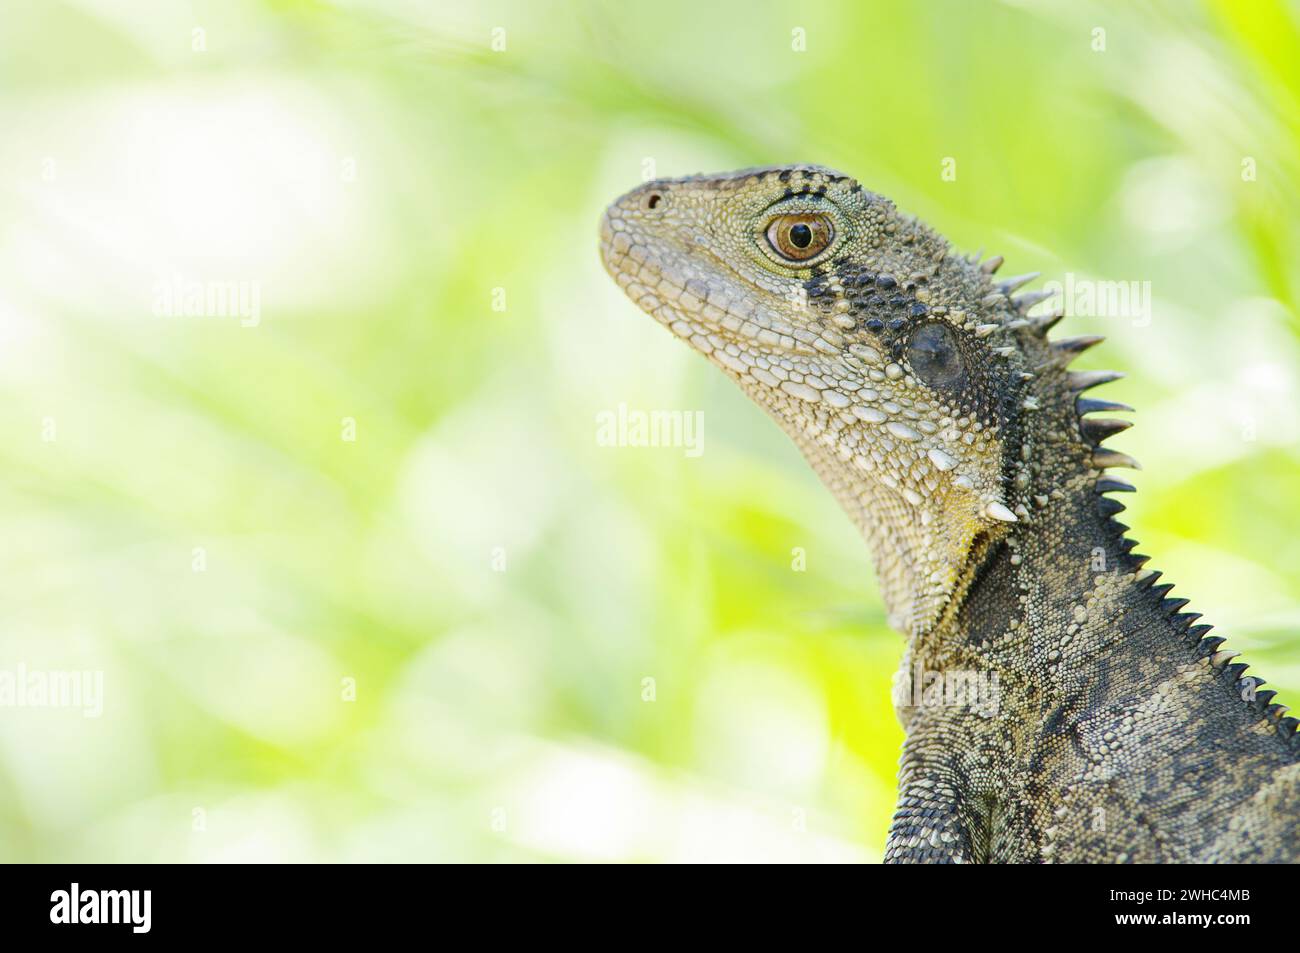 Great image of an australian eastern water dragon (Physignathus lesueurii lesueurii) Stock Photo